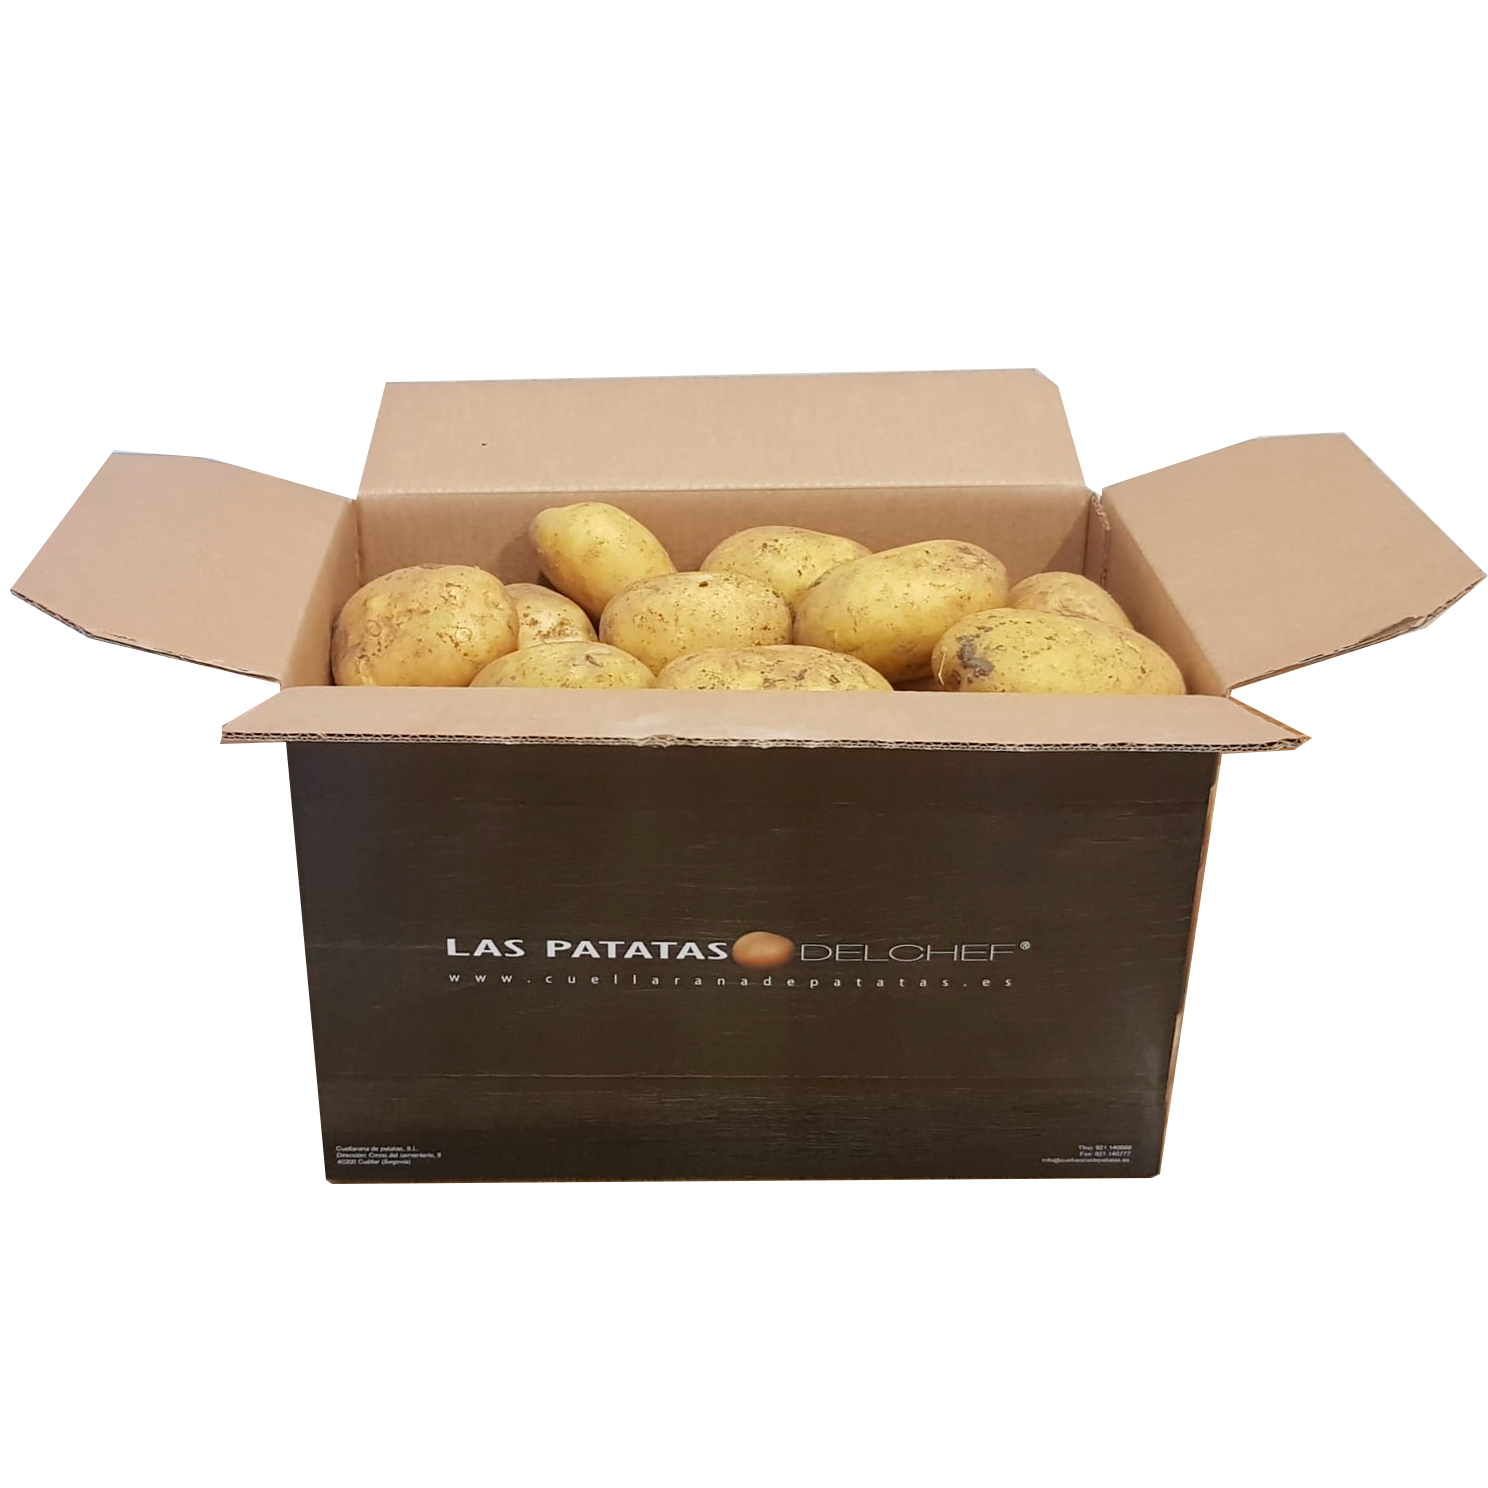 Caja de Patatas